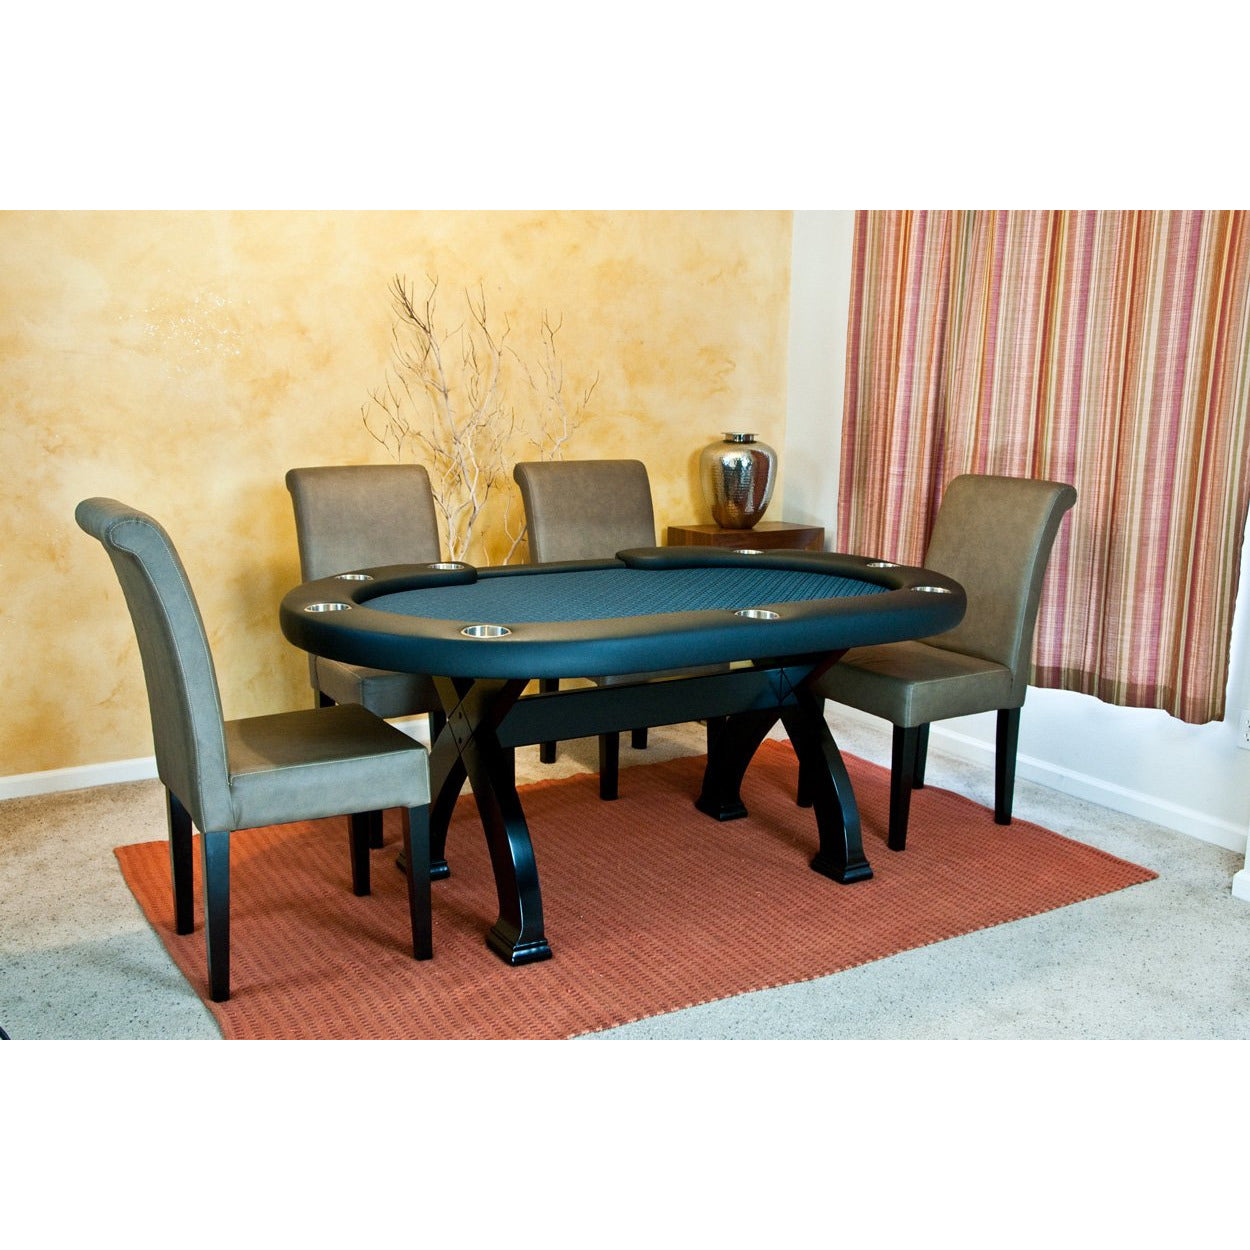 BBO Poker Tables "Set of 2" Premium Lounge Chair